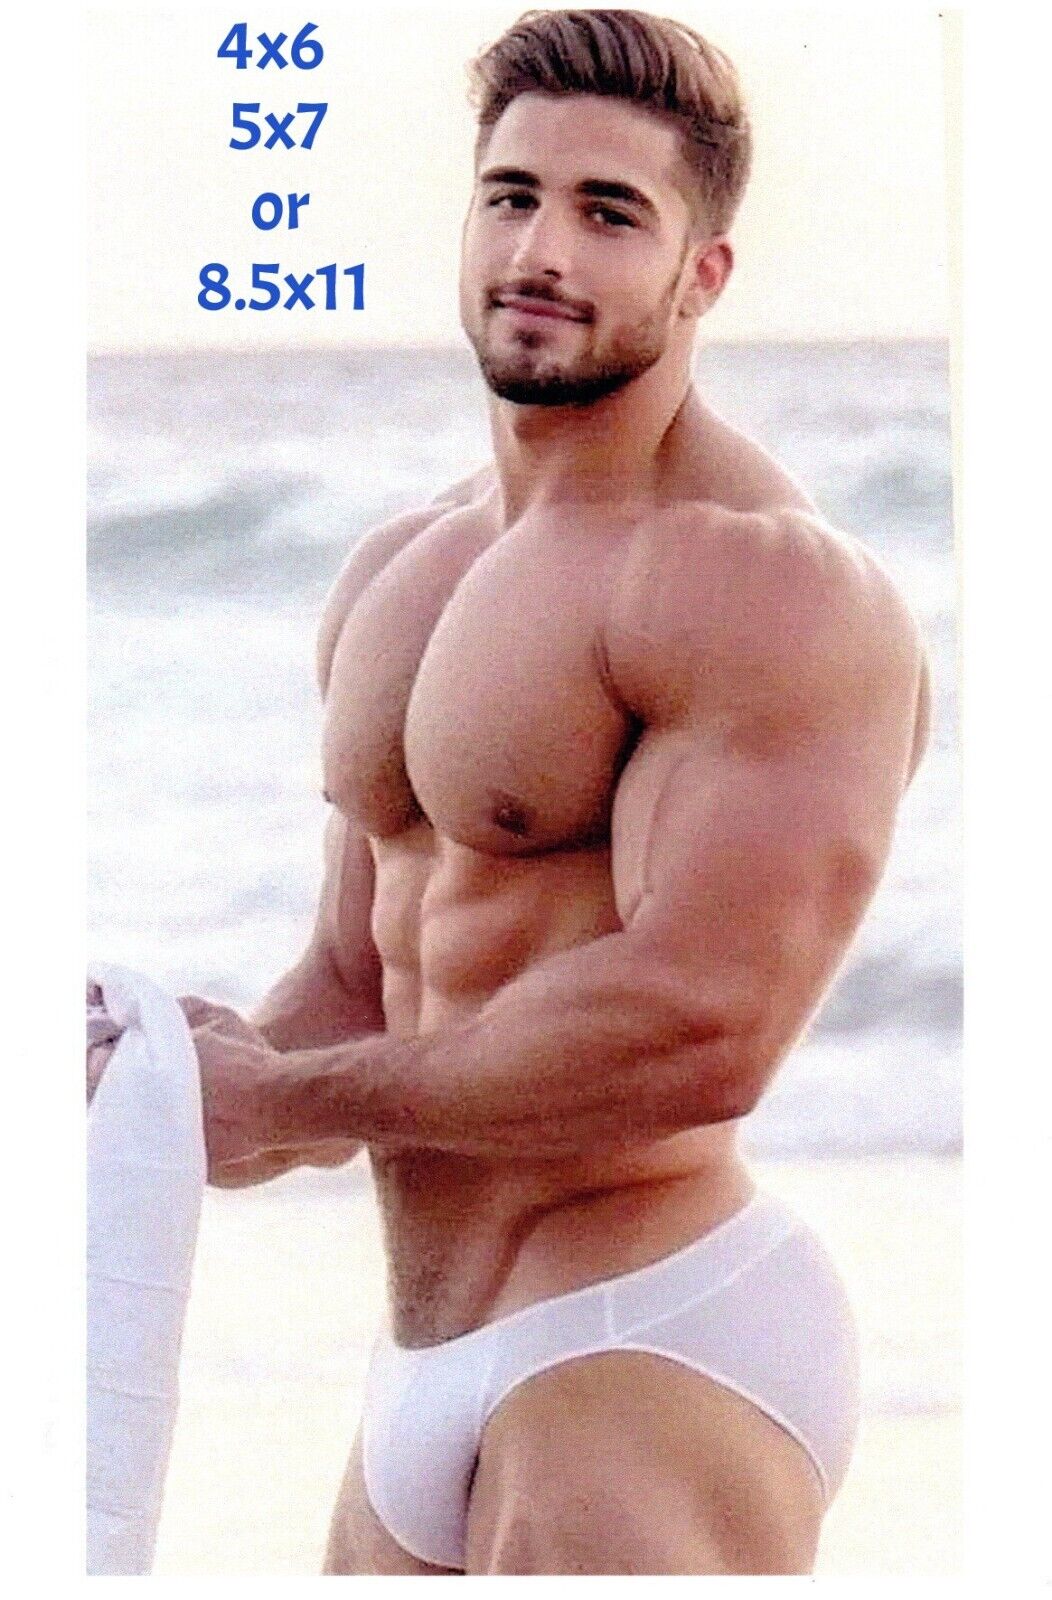 Handsome Muscular Male Bodybuilder Gay Interest Photo Photograph Reprint #20